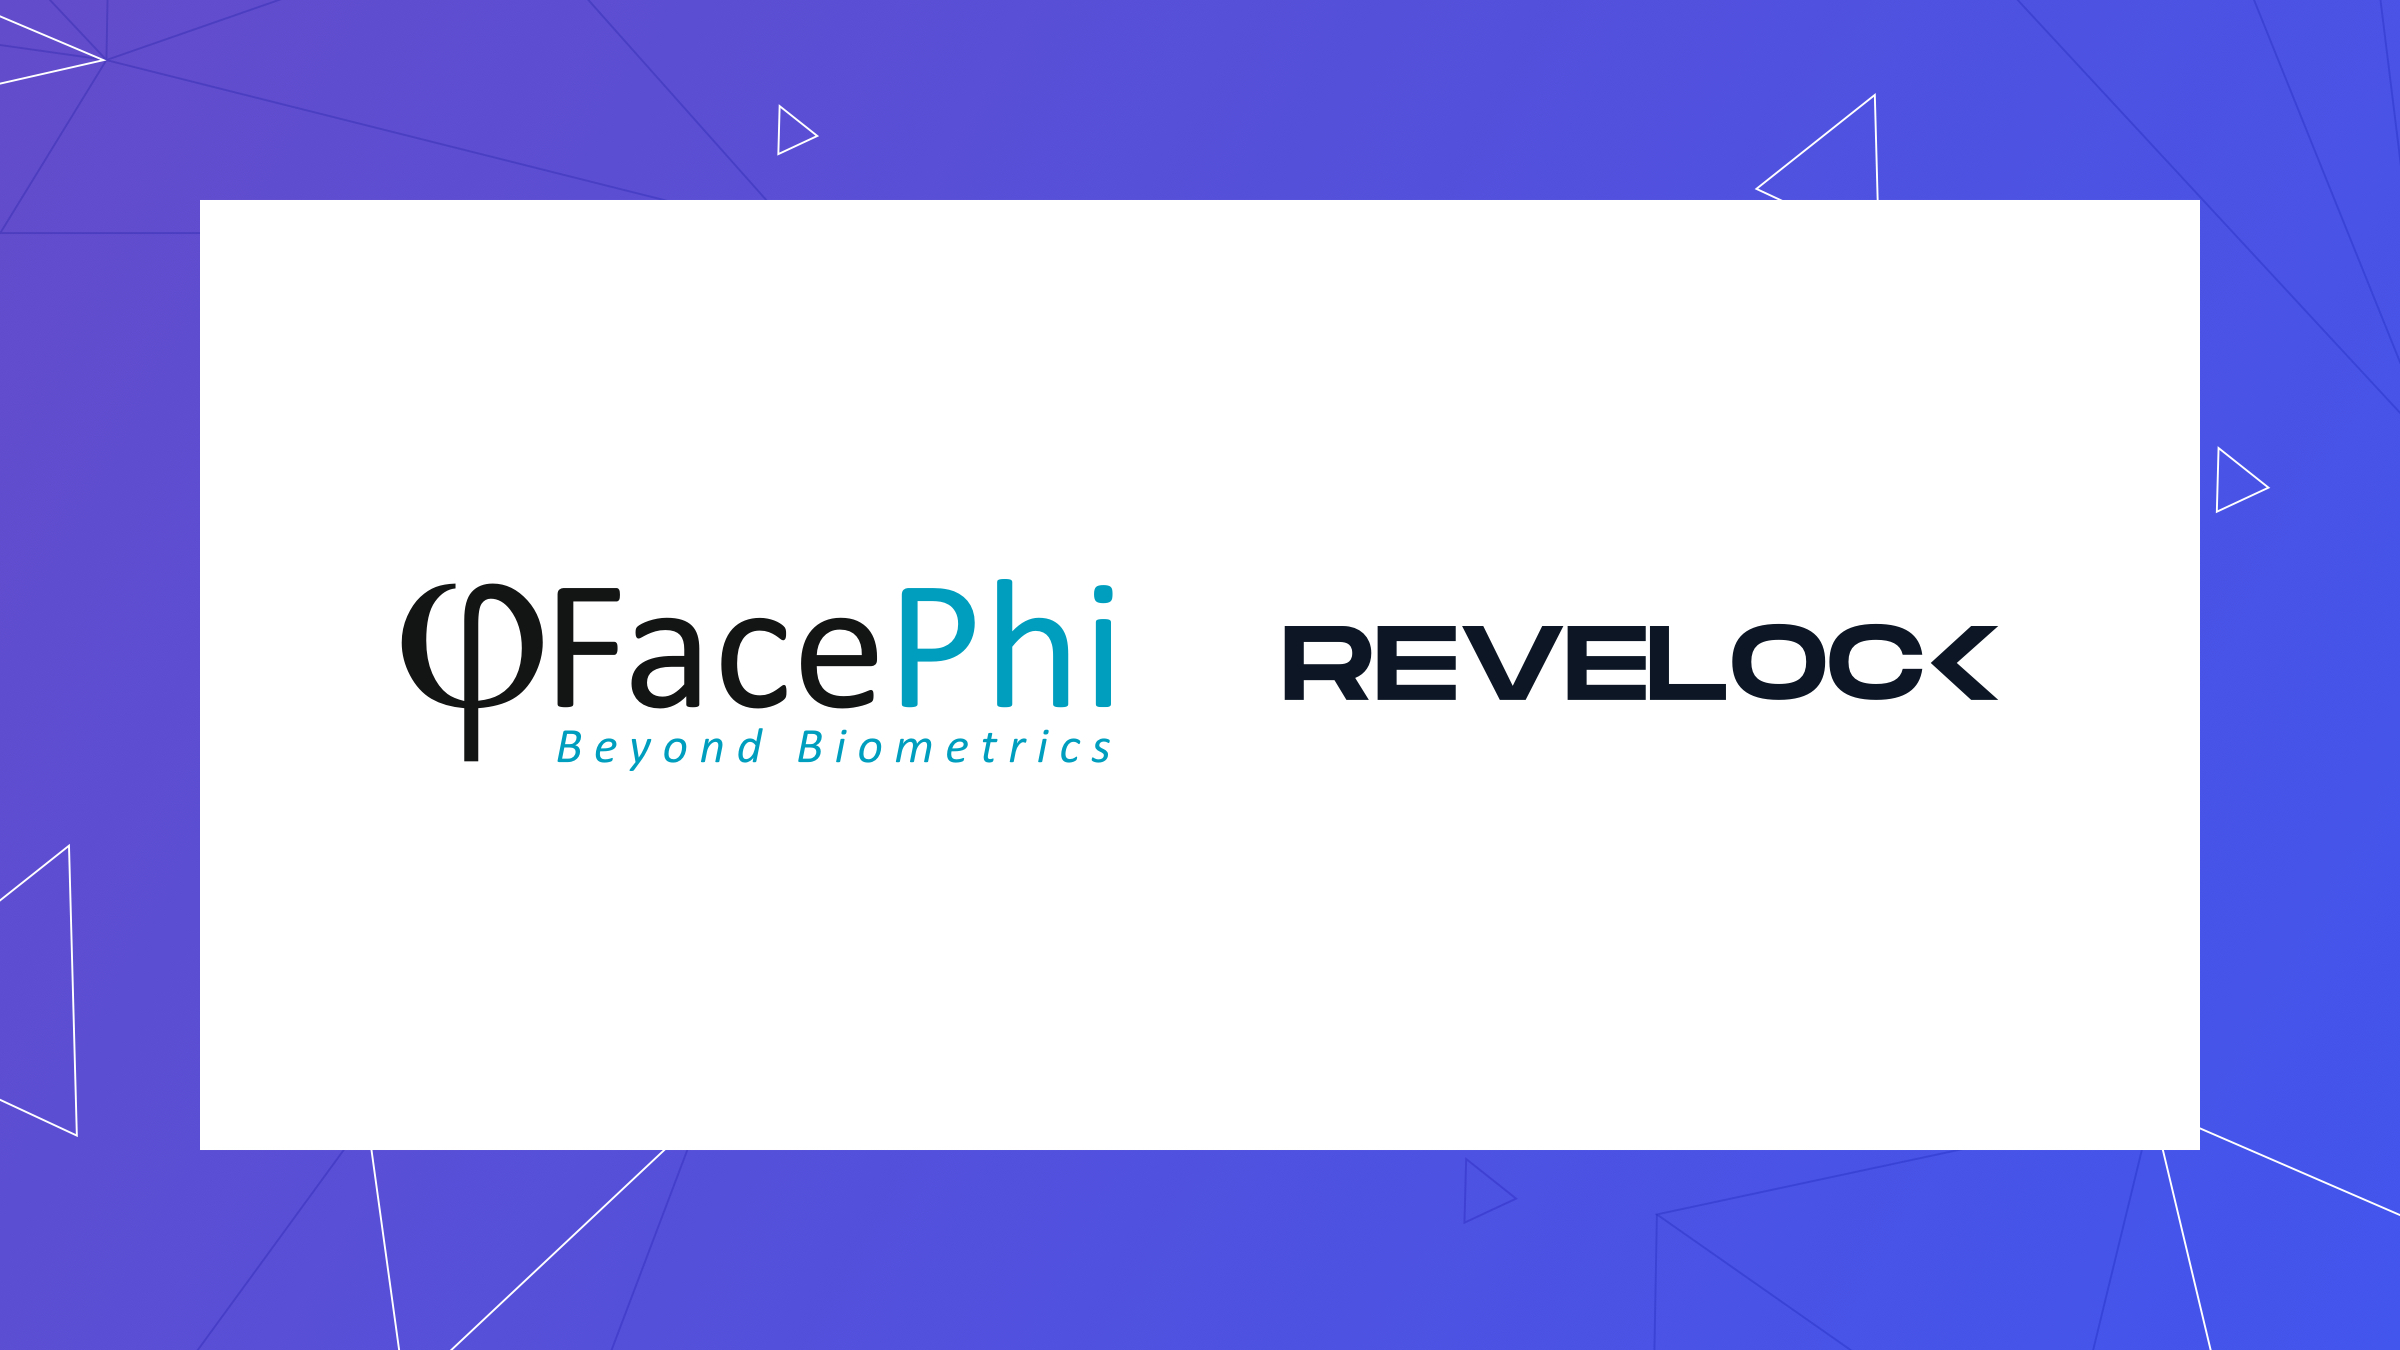 FacePhi and Revelock